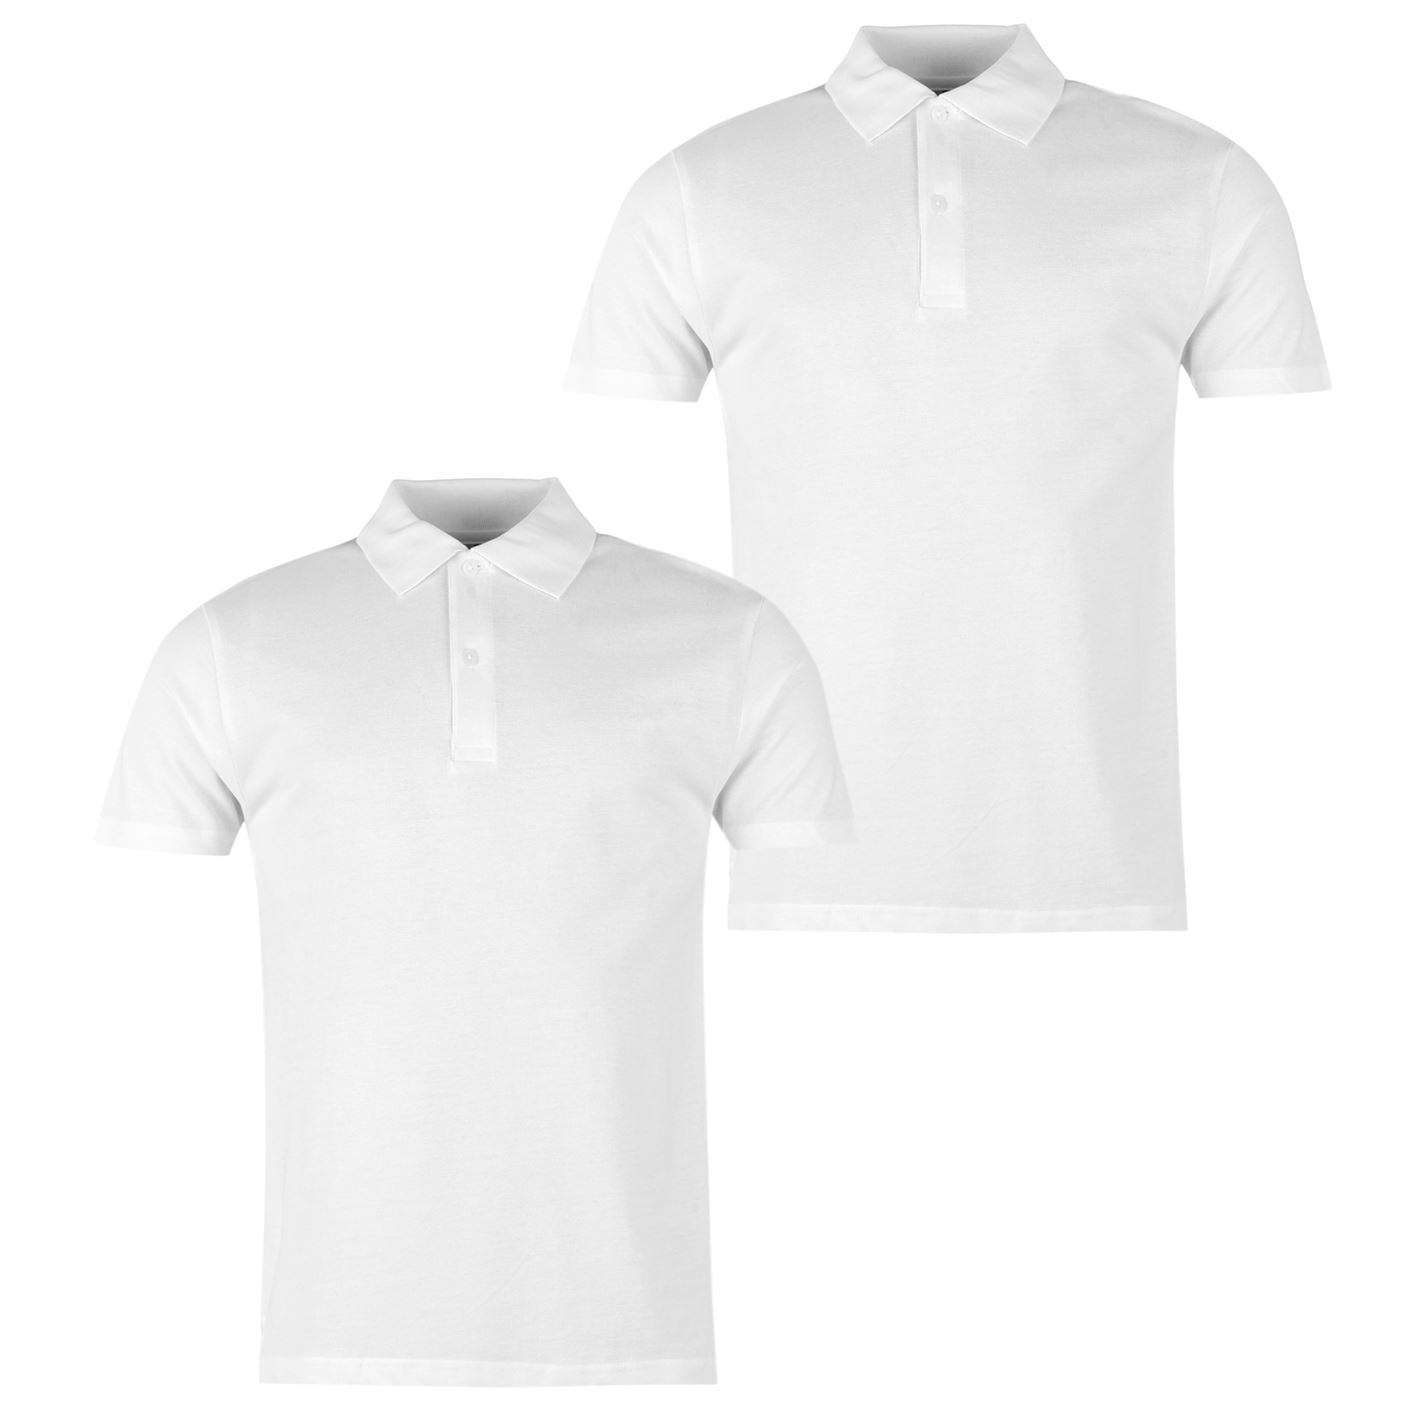 Donnay Polo Shirts Mens 2 kusy